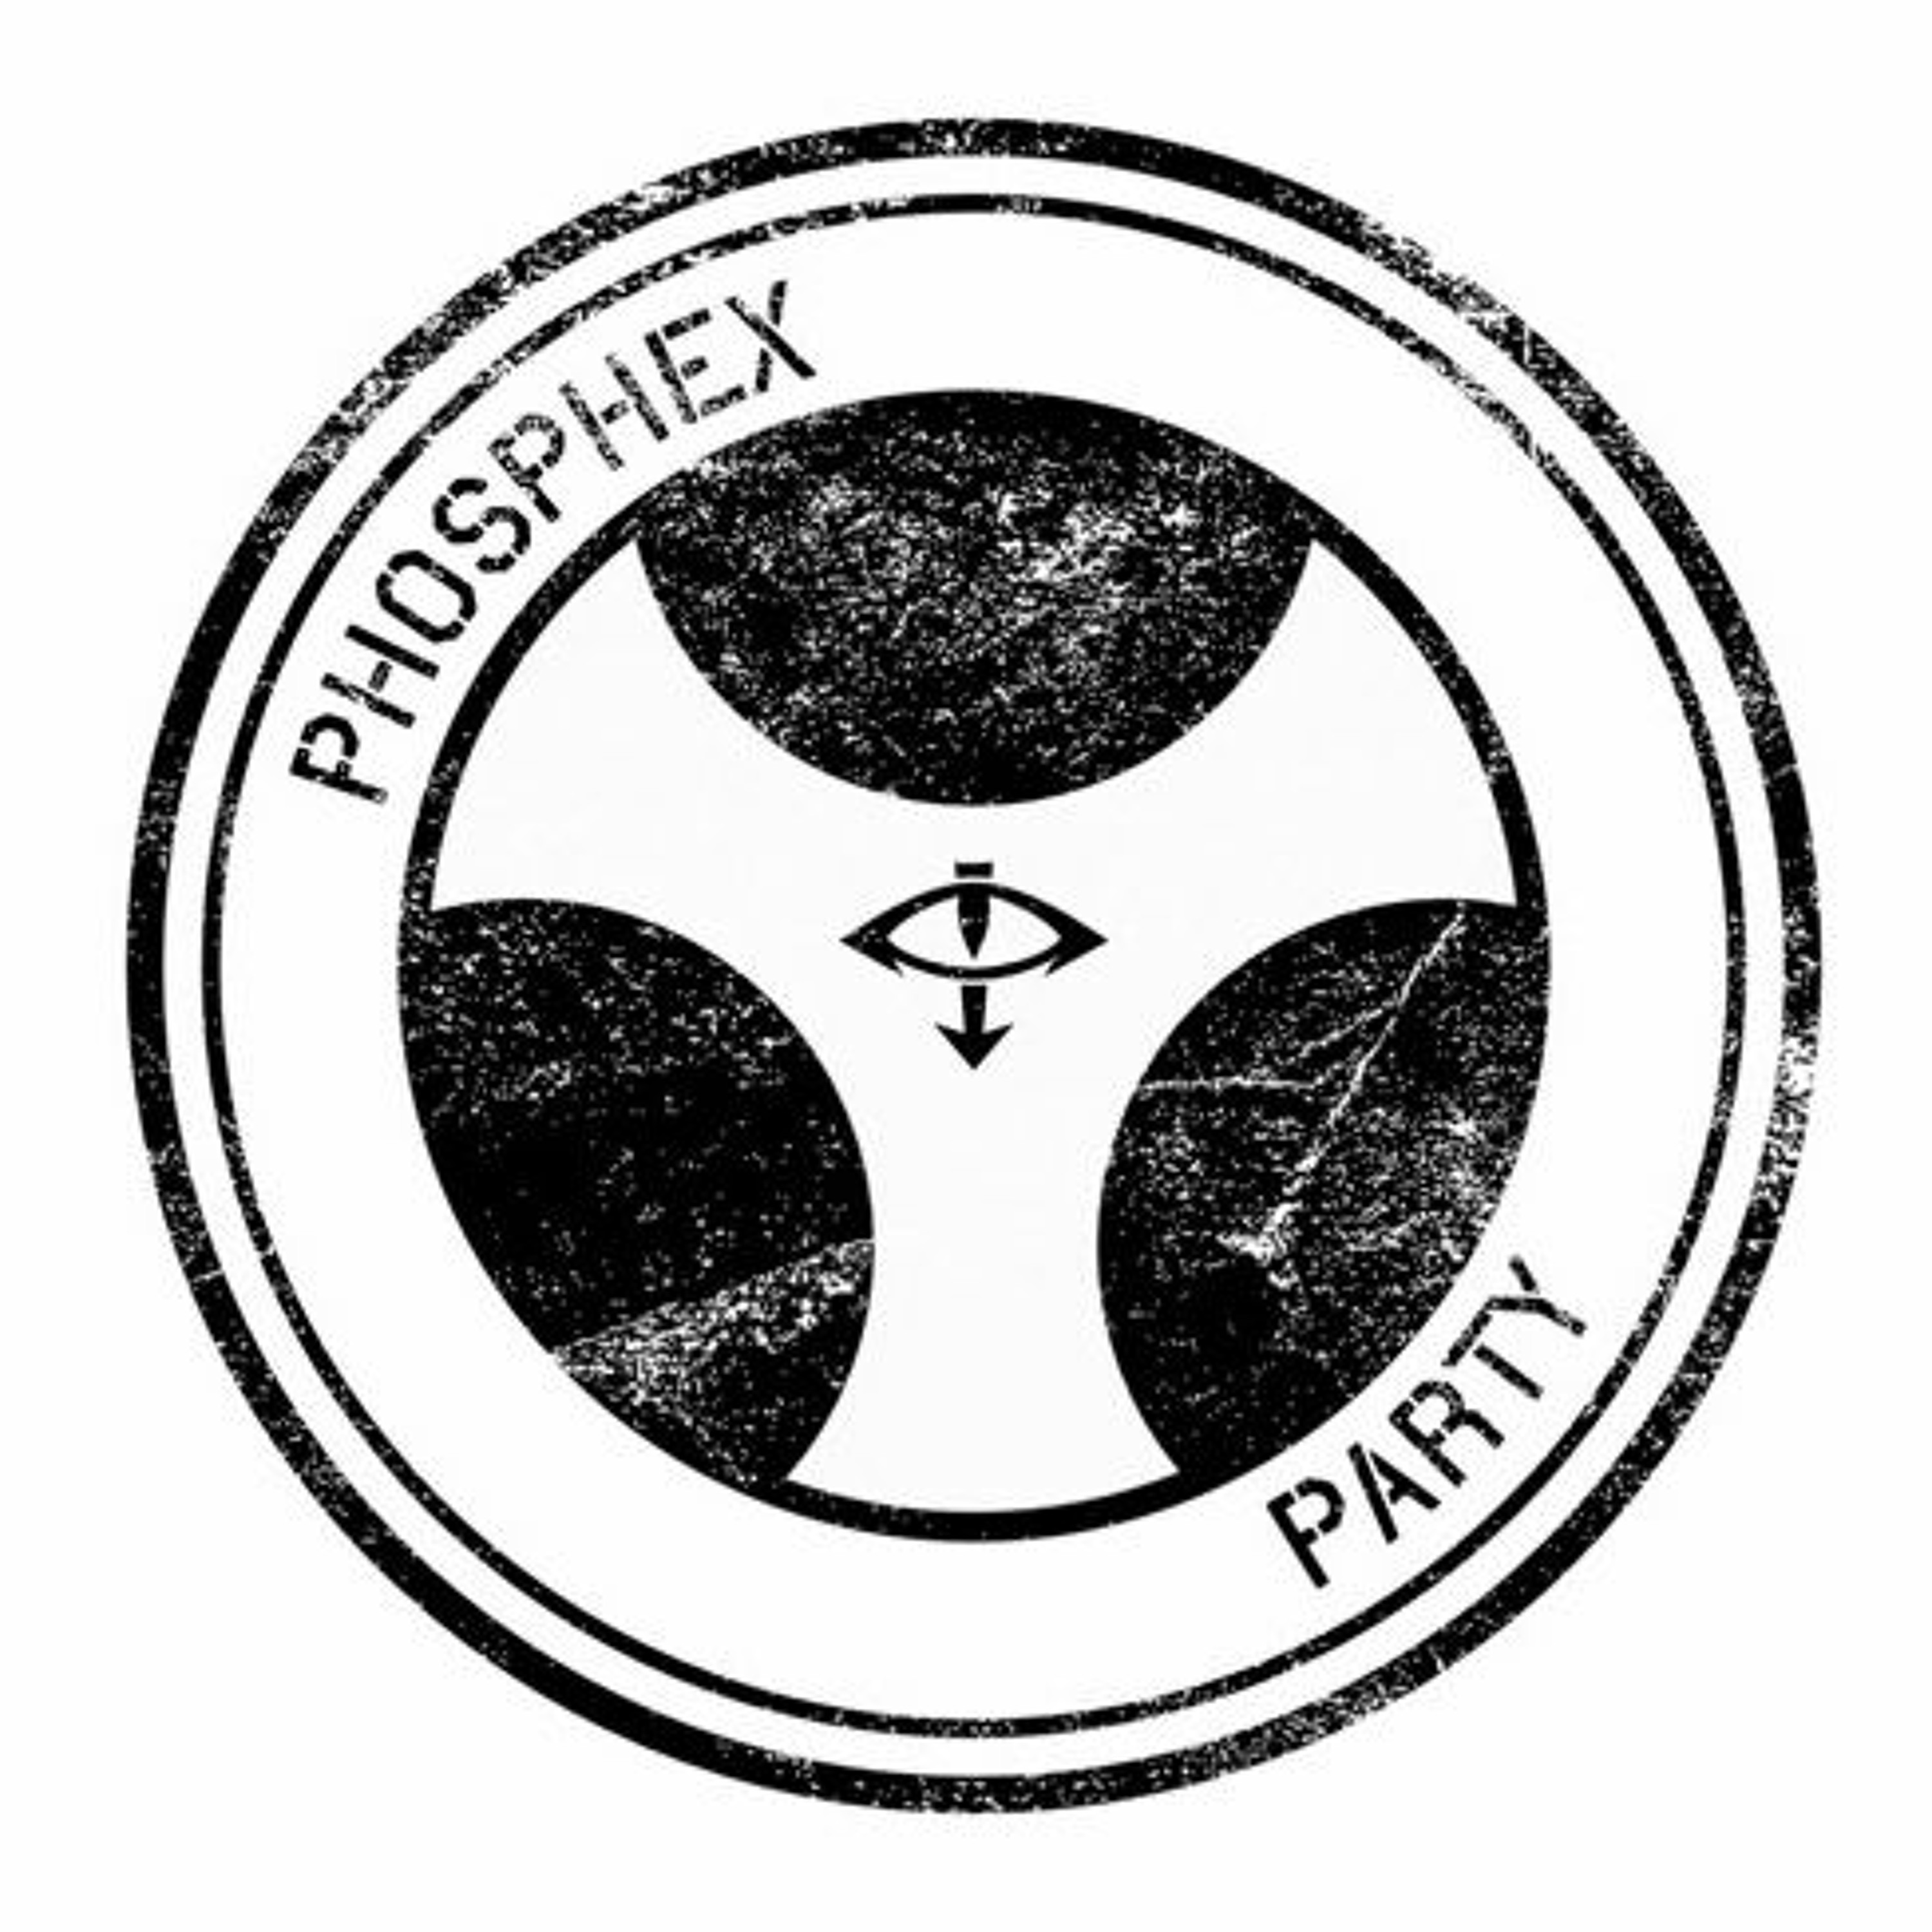 Phosphex Party 34 - Vox Disruption, Road Map and Dan???